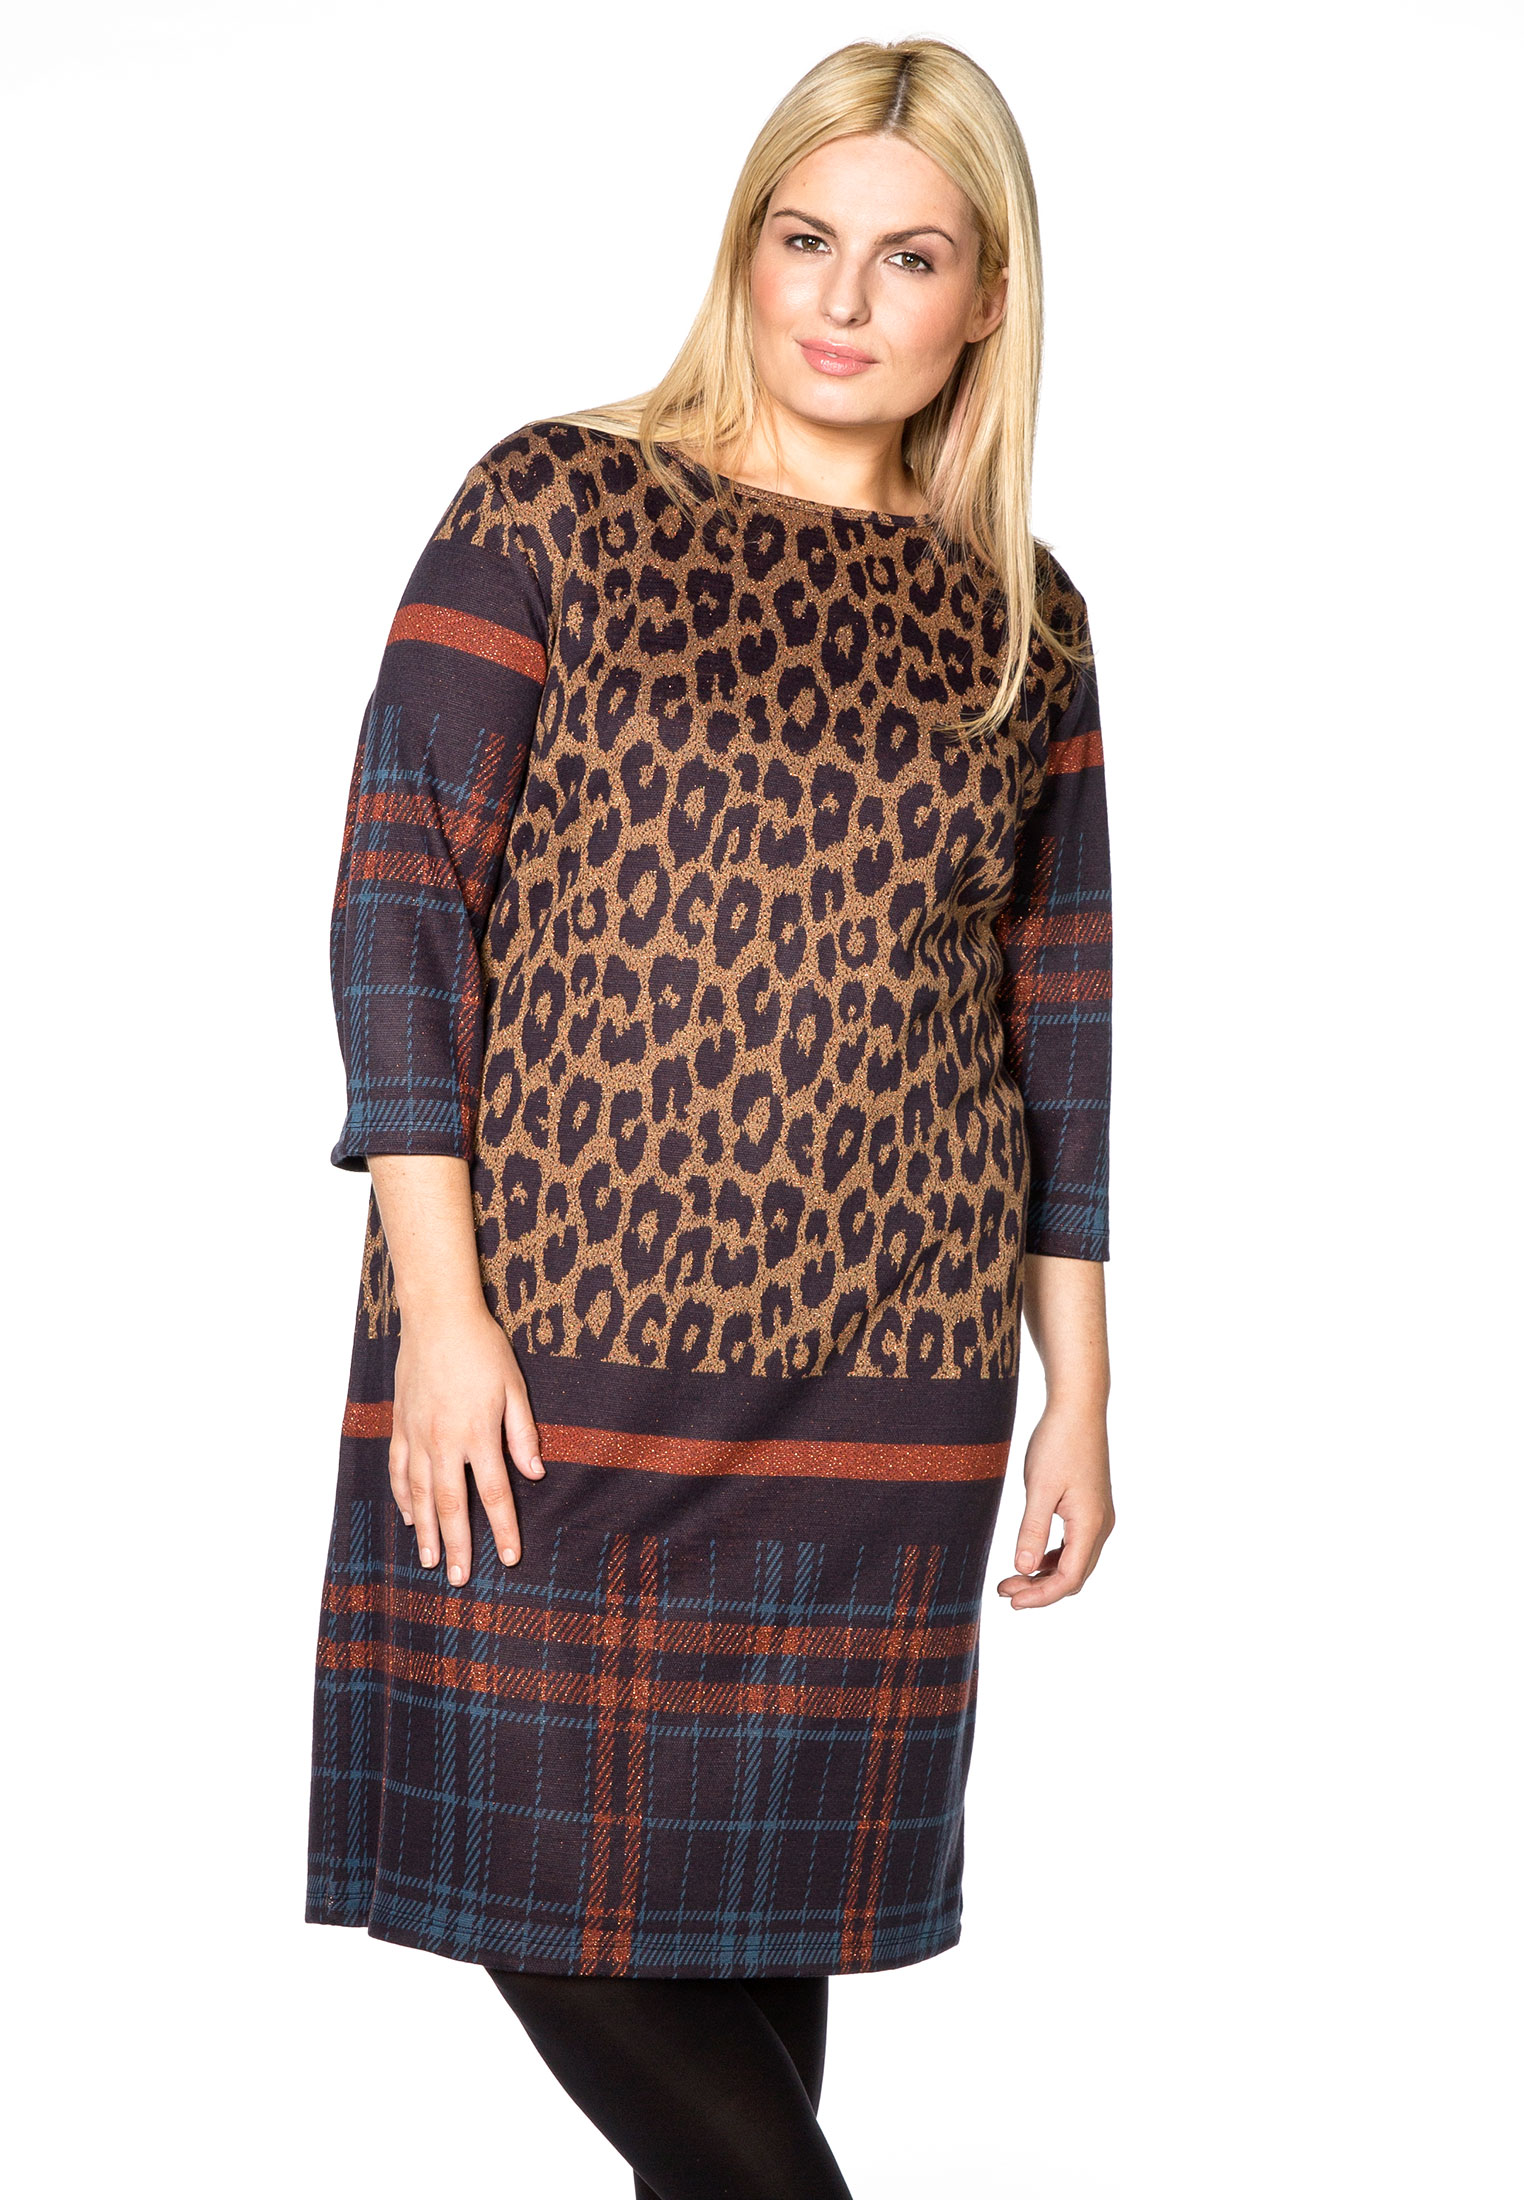 Dress Leopard Check XL multi